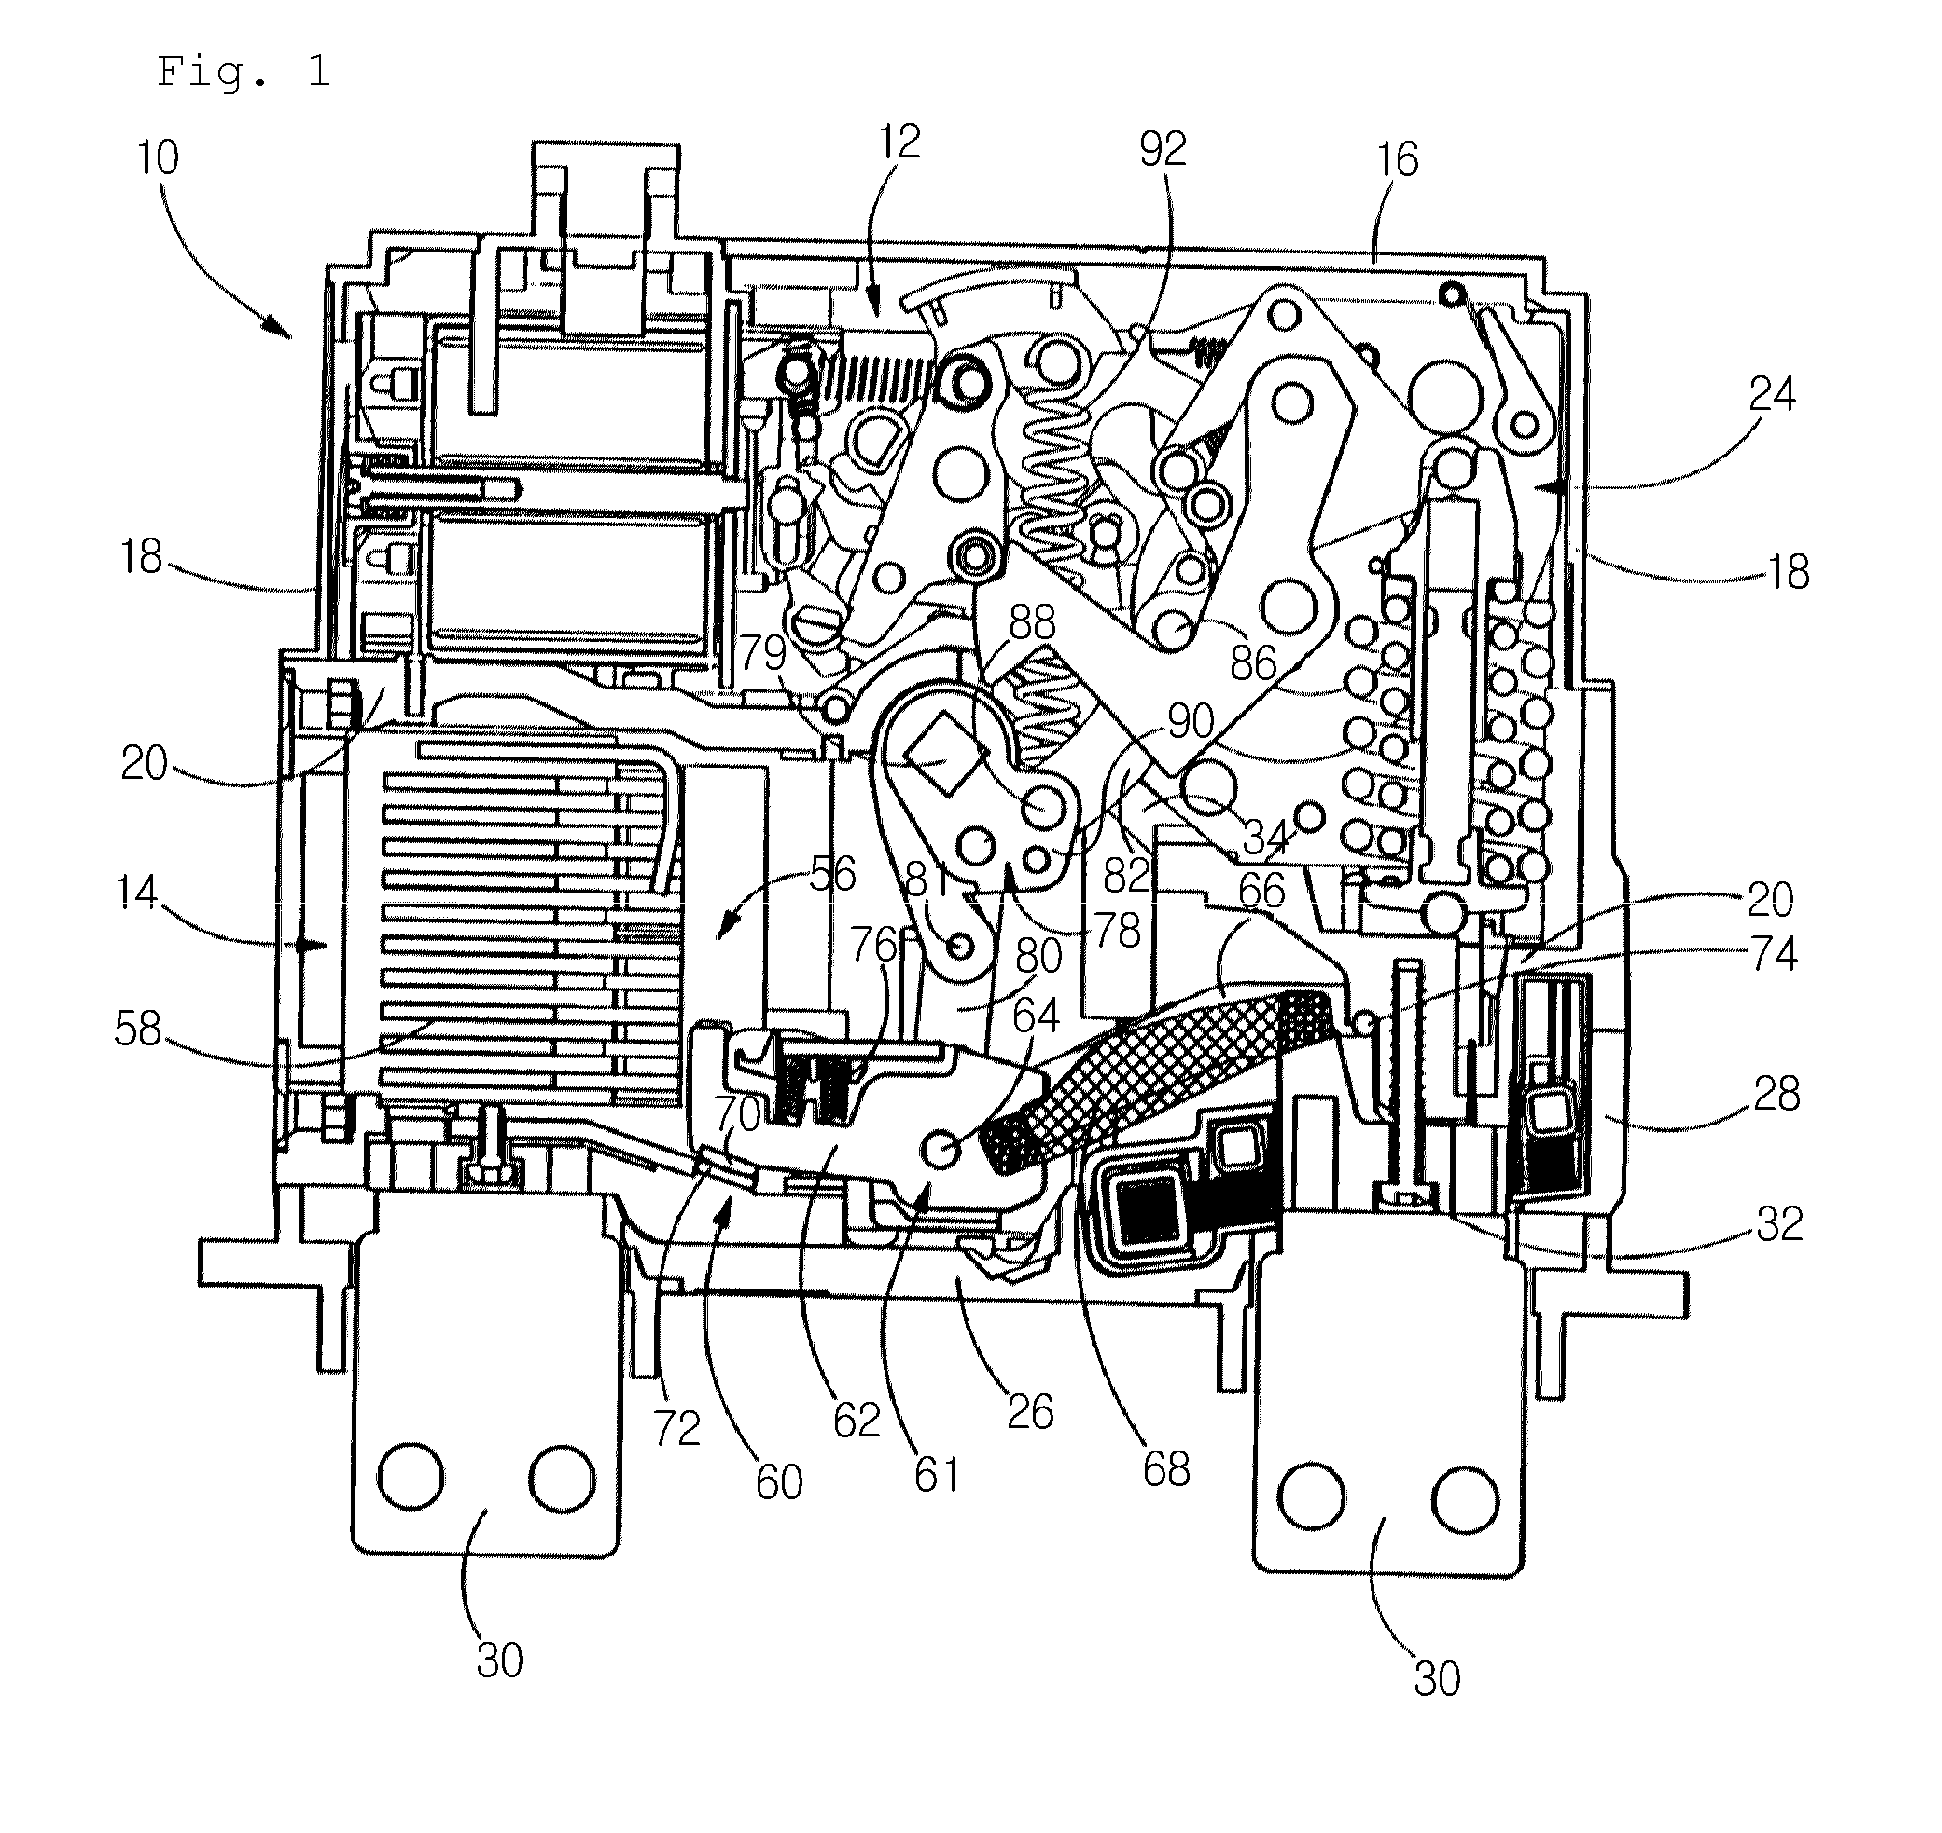 Molded-case circuit breaker